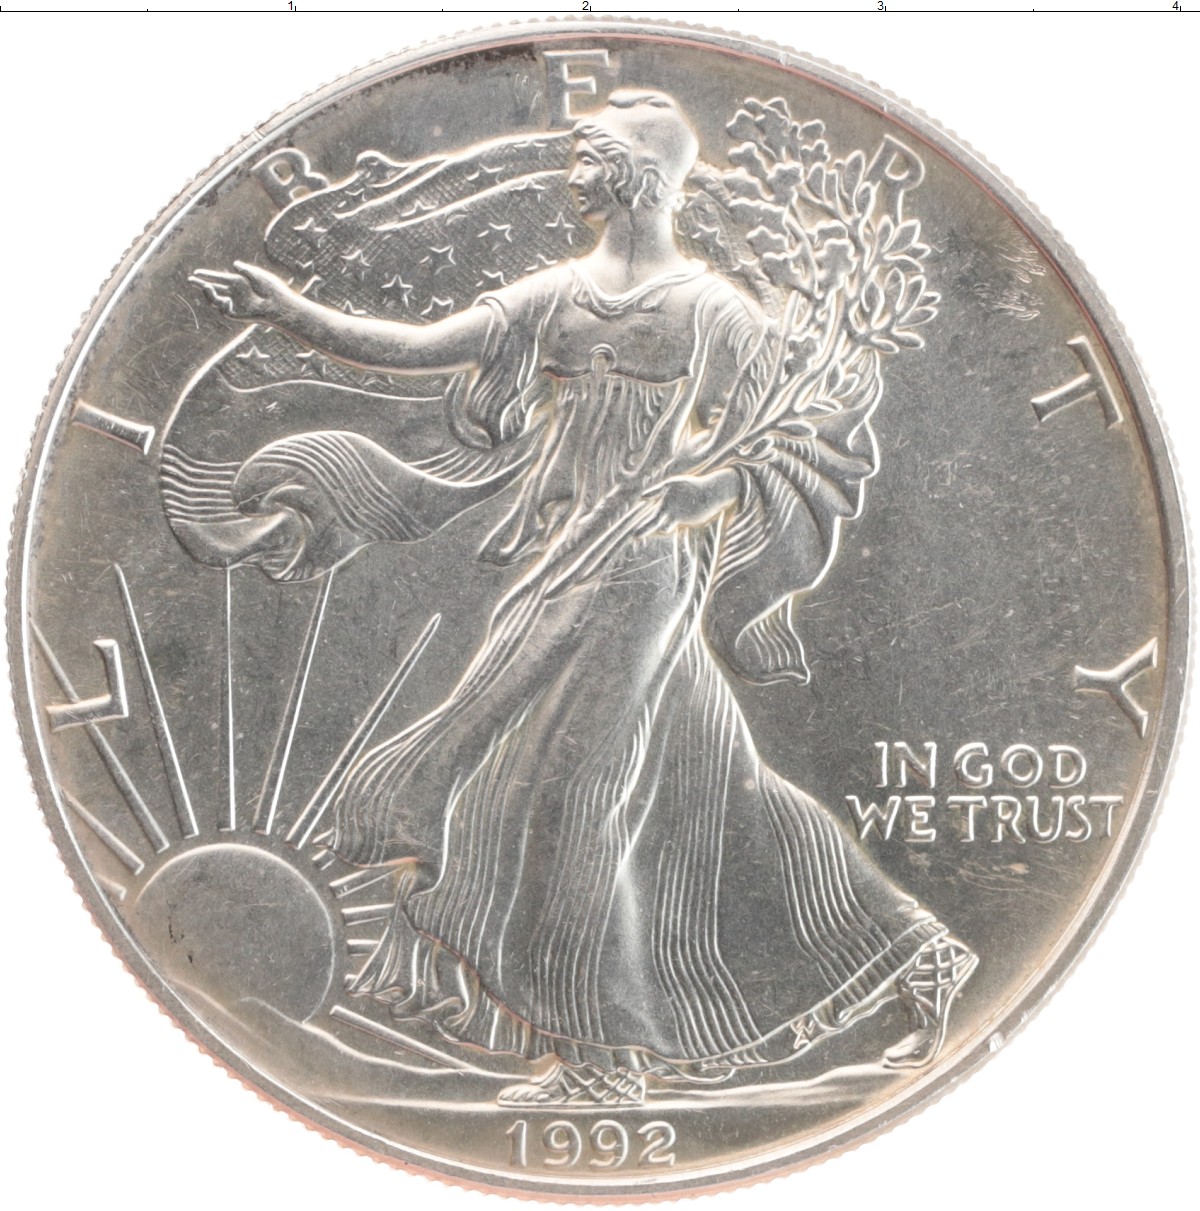 Шагающая свобода 1. Монета шагающая Свобода серебро. Шагающая Свобода 1 доллар США серебро. 10 Долларовая монета. Монета США 1 унция Единорог серебро UNC.